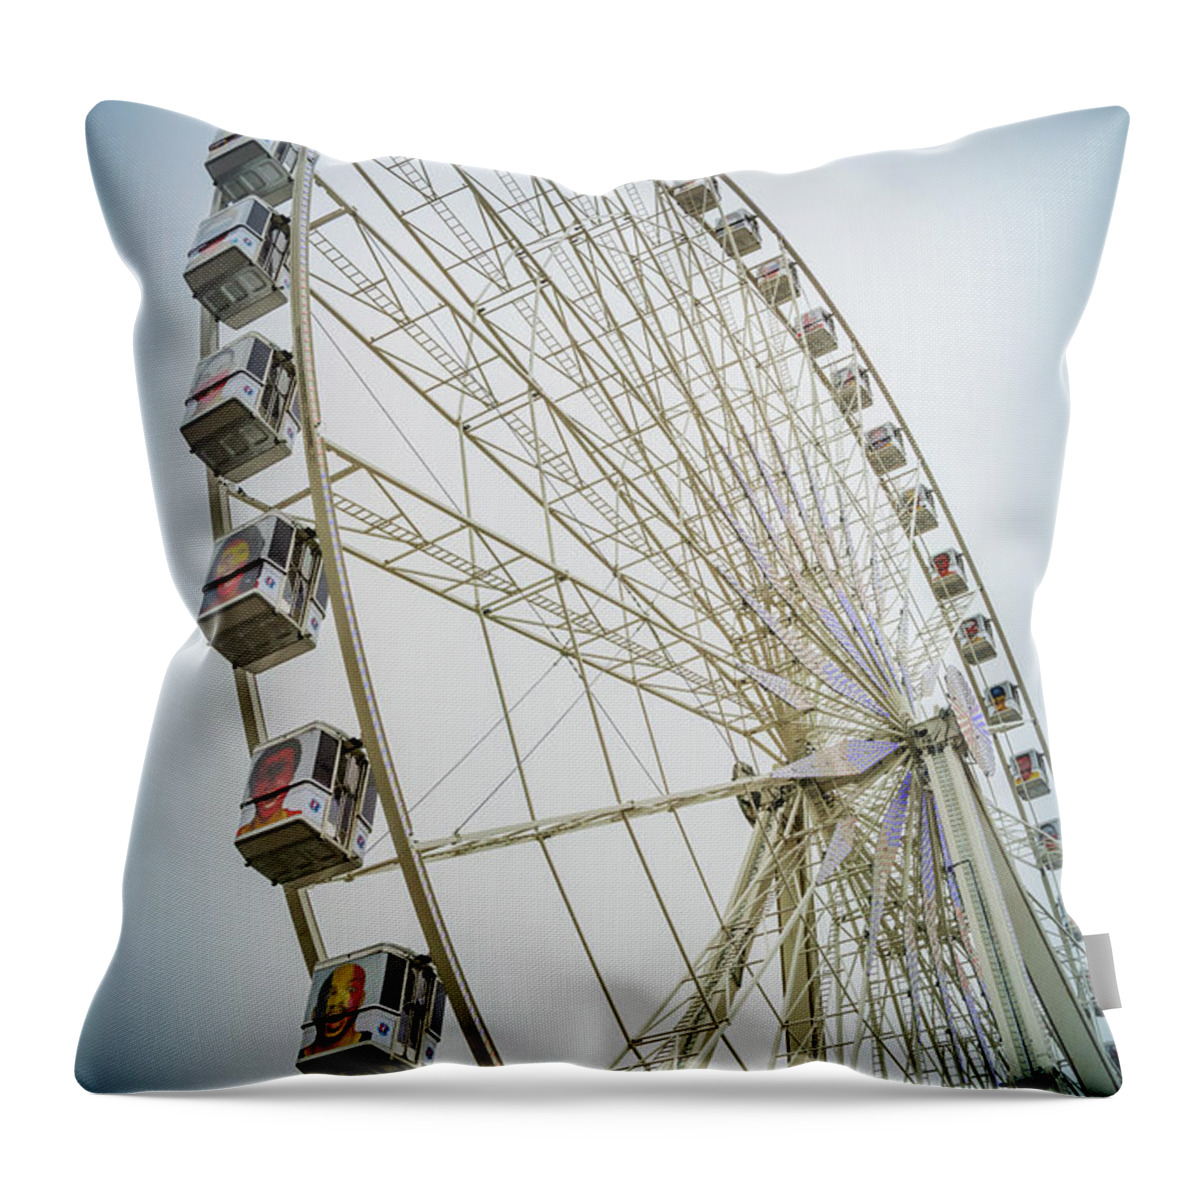 Joan Carroll Throw Pillow featuring the photograph Paris Observation Wheel by Joan Carroll